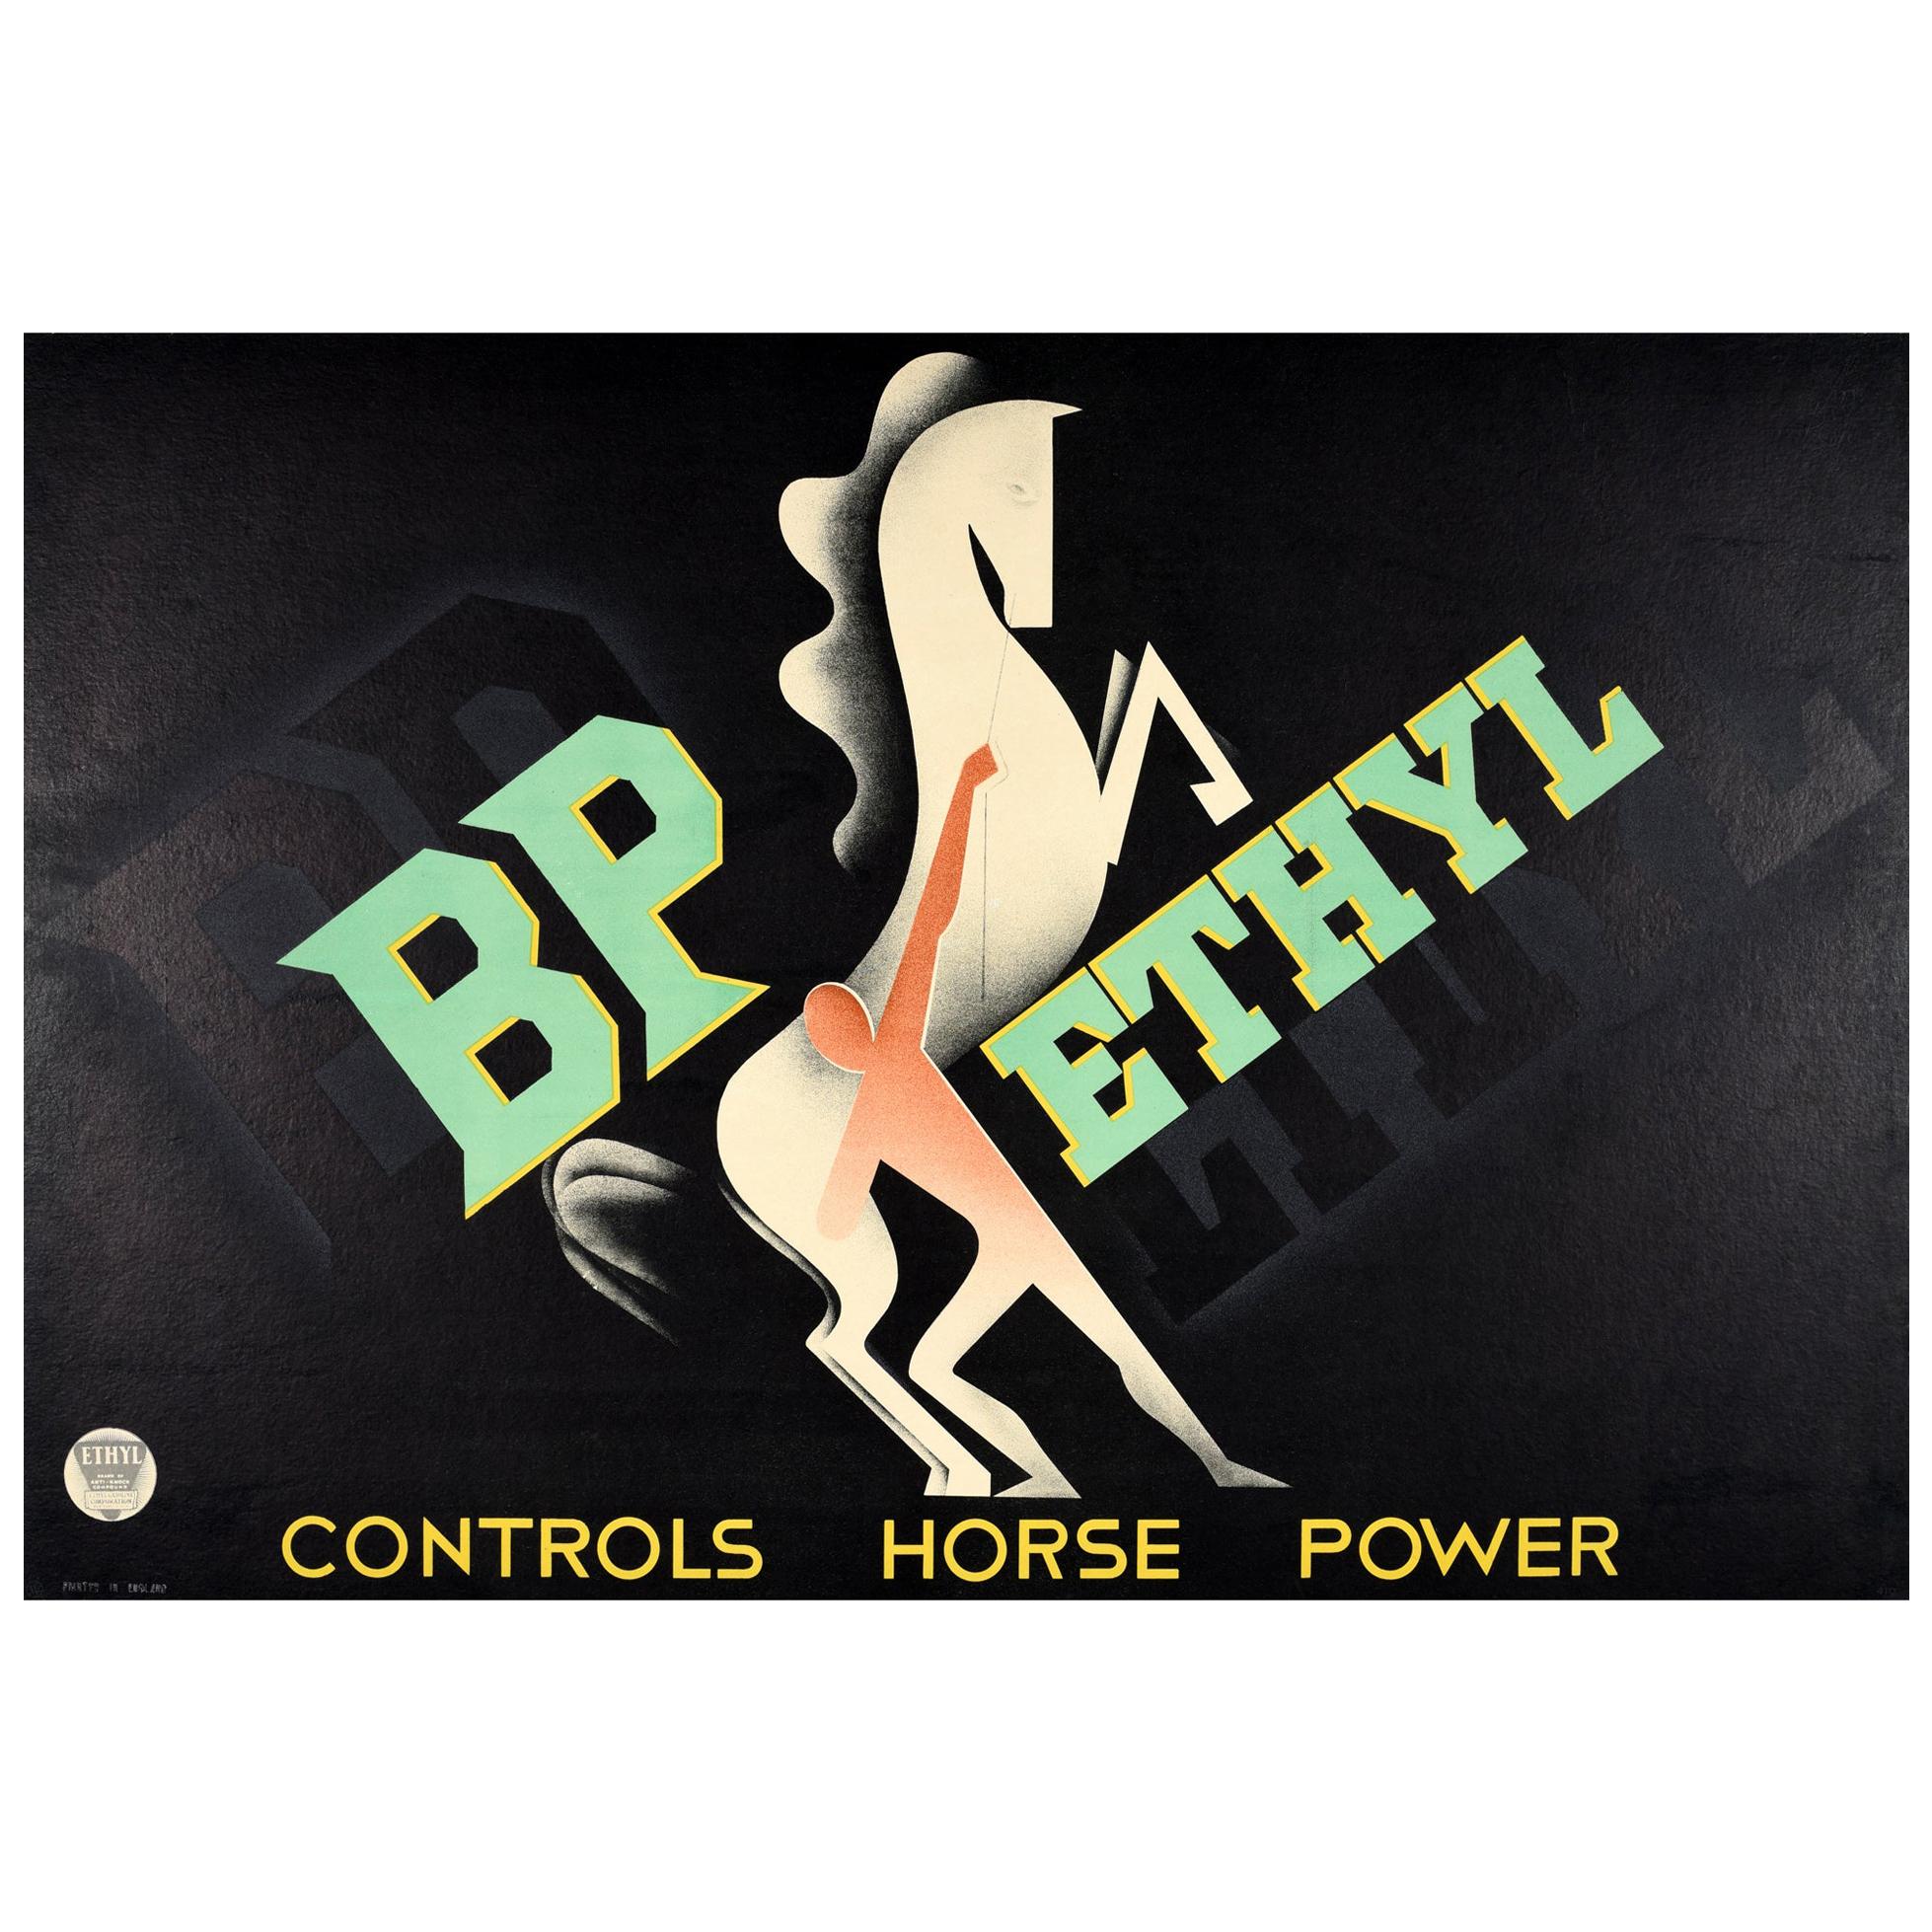 Original Vintage Poster BP Ethyl Controls Horse Power Modernist Art Deco Design